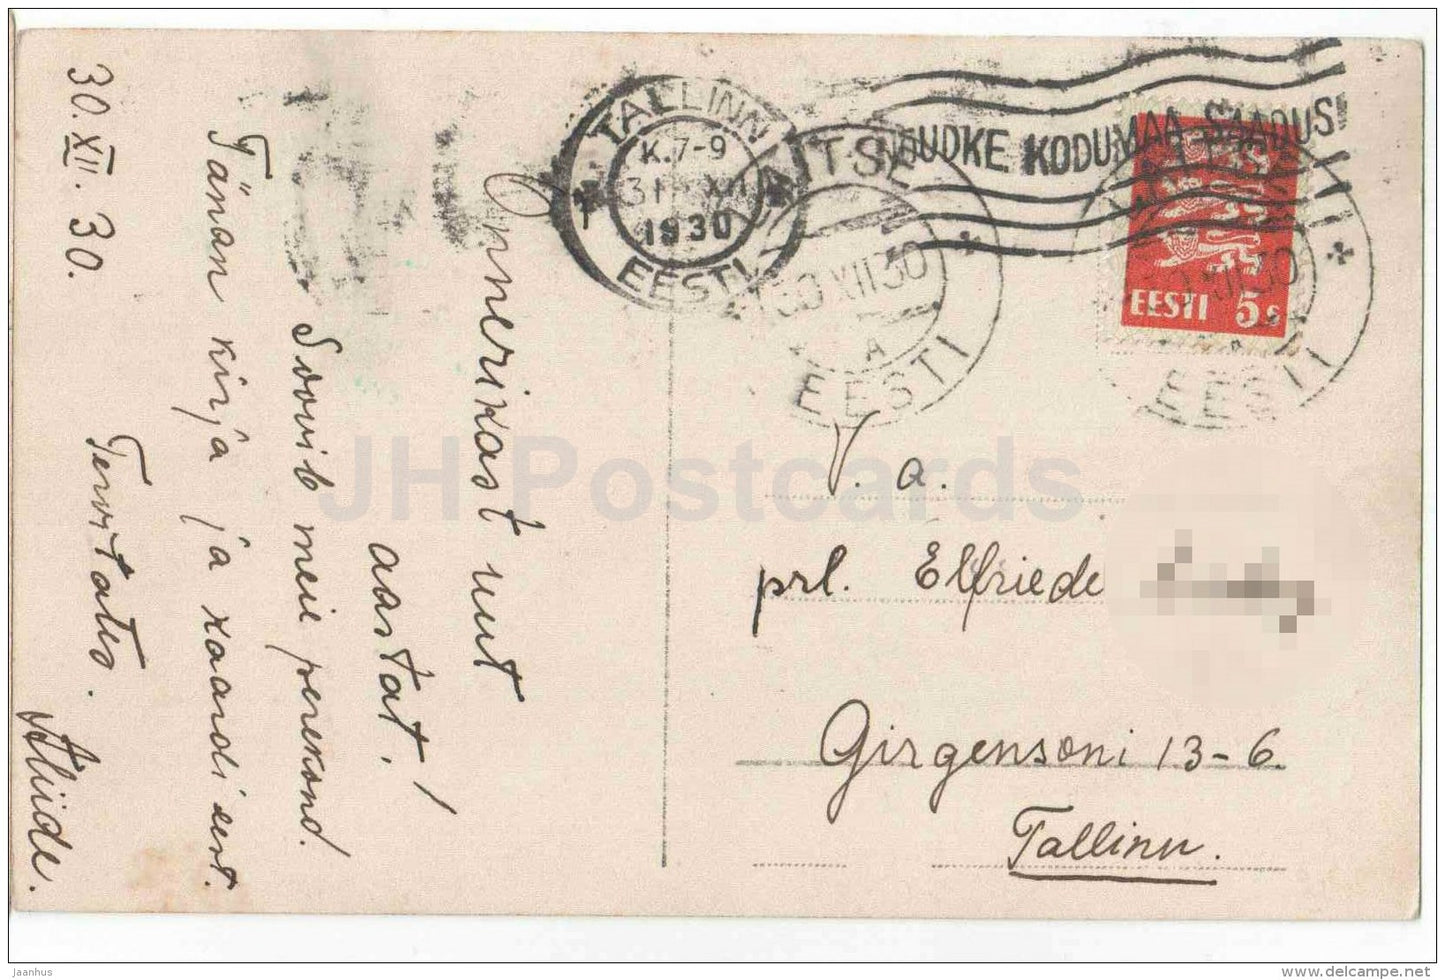 New Year greeting card - girl - horseshoe - windmill - Amag 64367/3 - circulated in Estonia Tallinn Laitse 1930 - JH Postcards